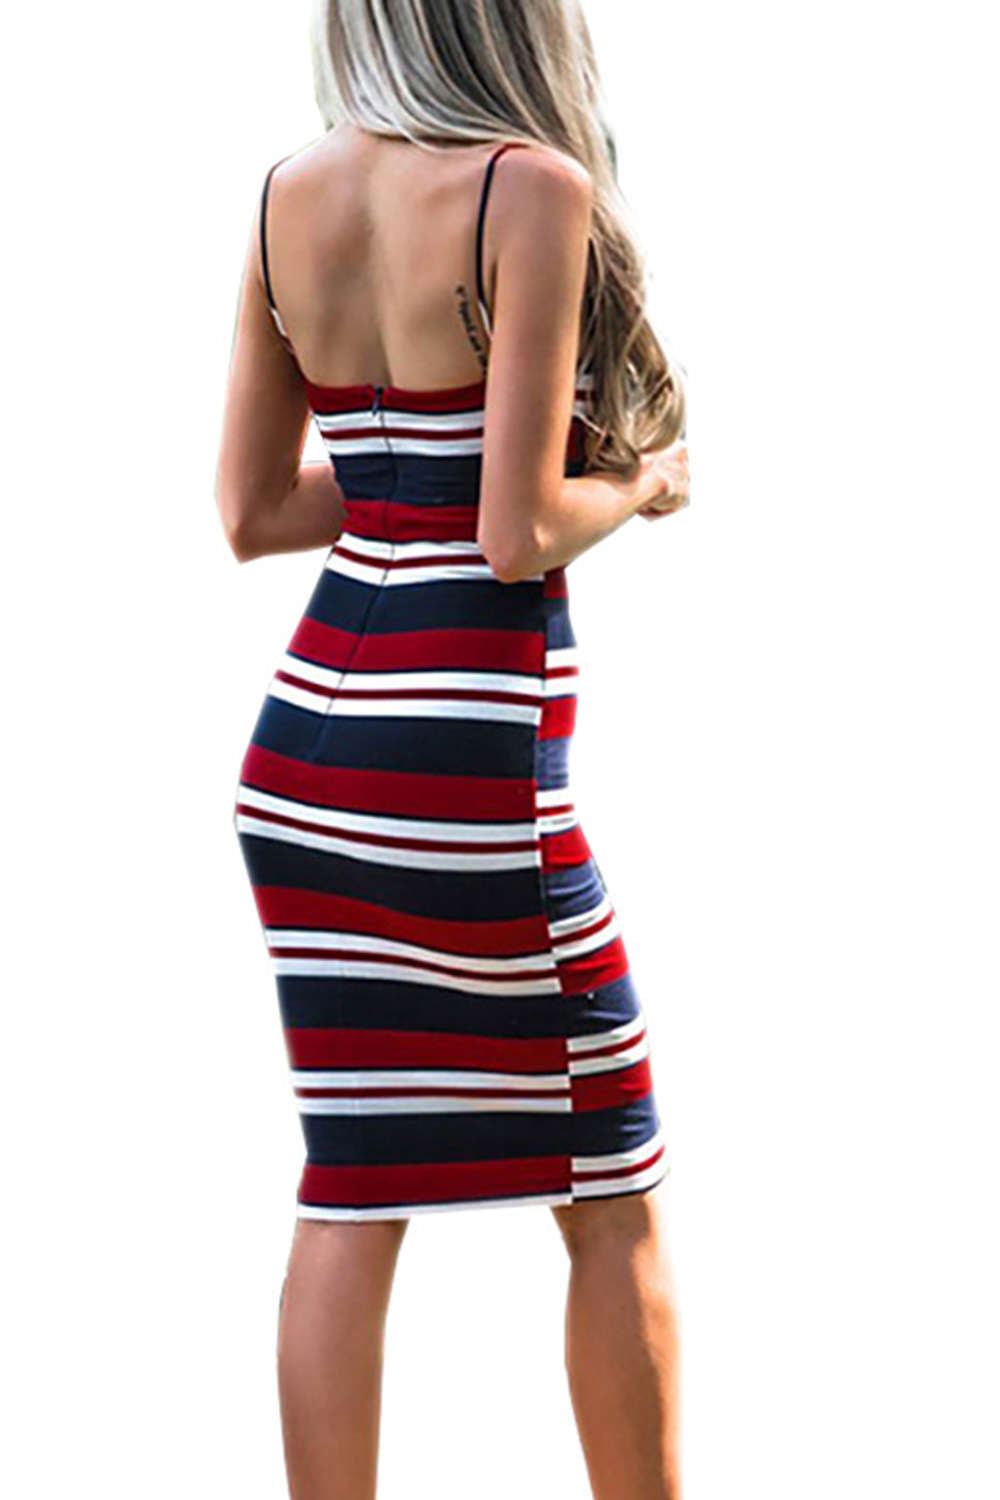 Iyasson Female Knee-Length Striped Sleeveless Bodycon Dresses